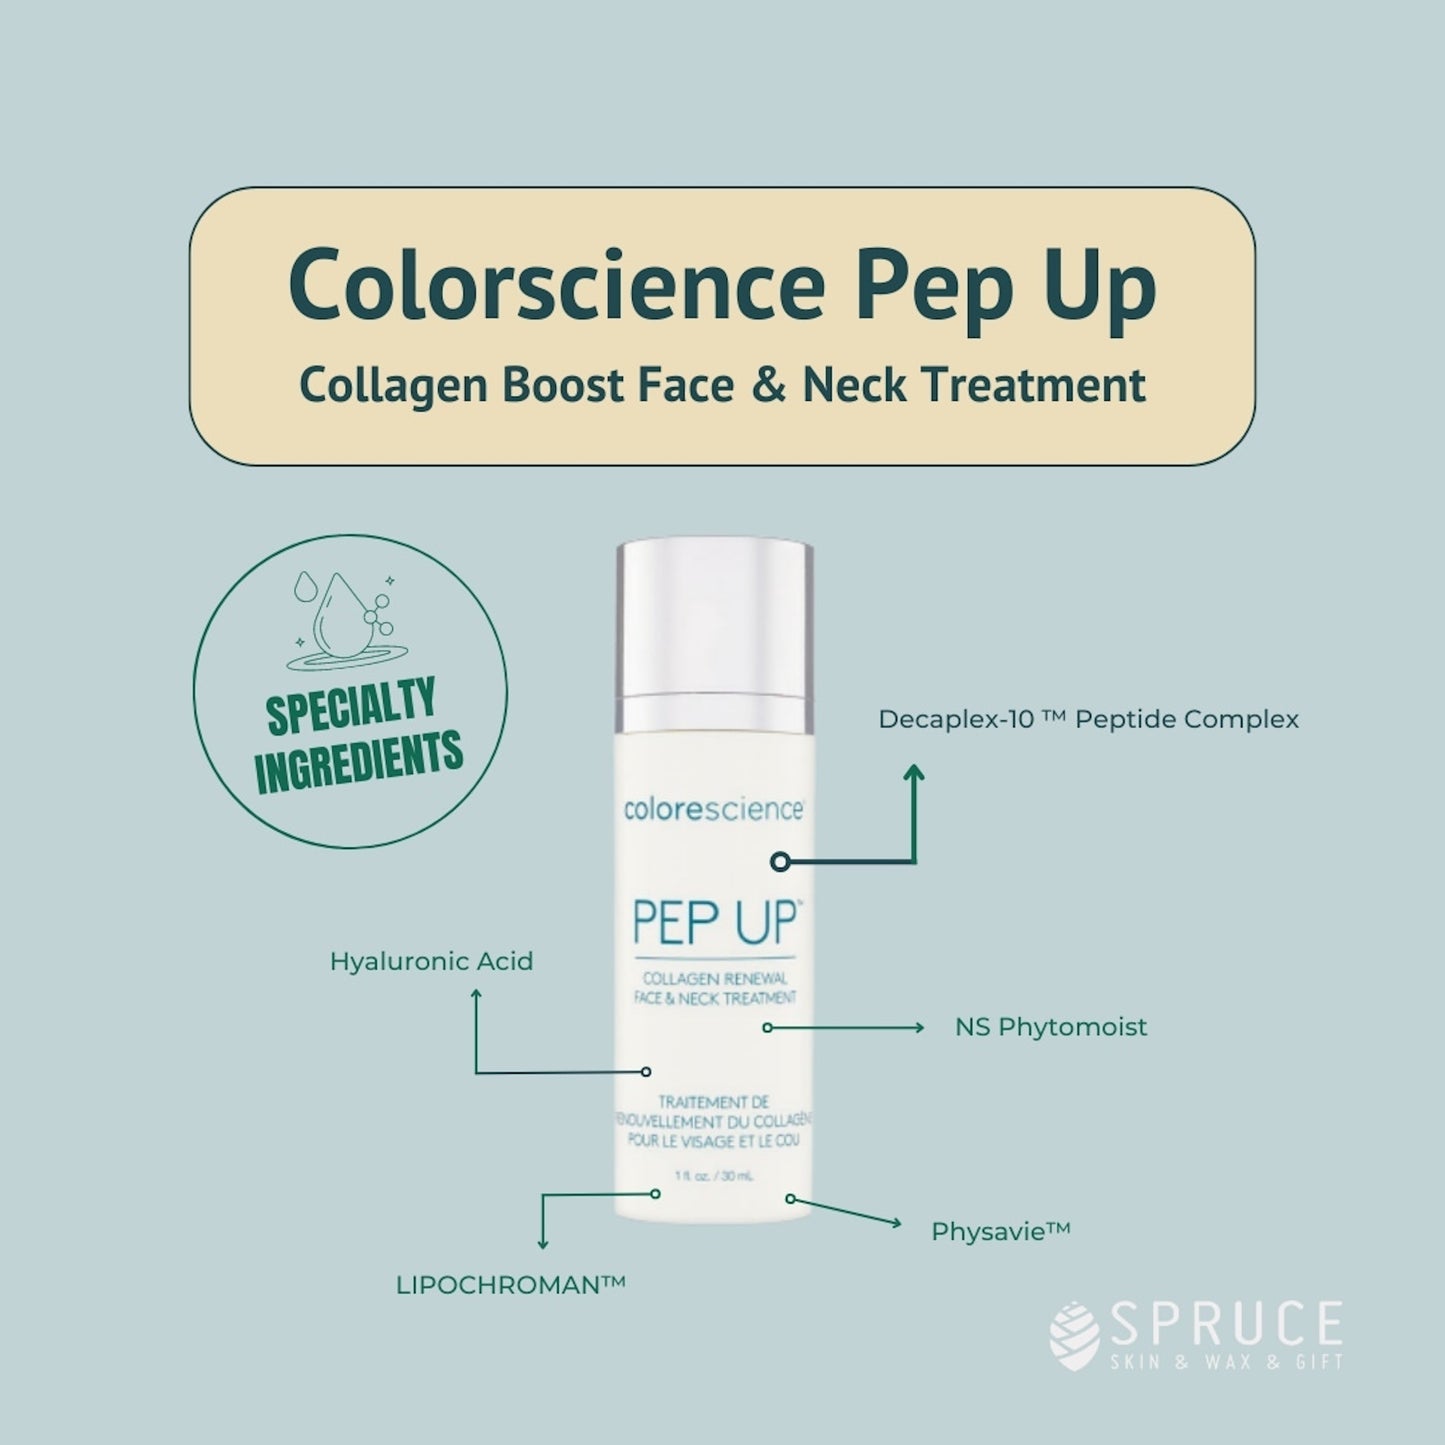 Colorescience Pep up Collagen Renewal Face & Neck Treatment